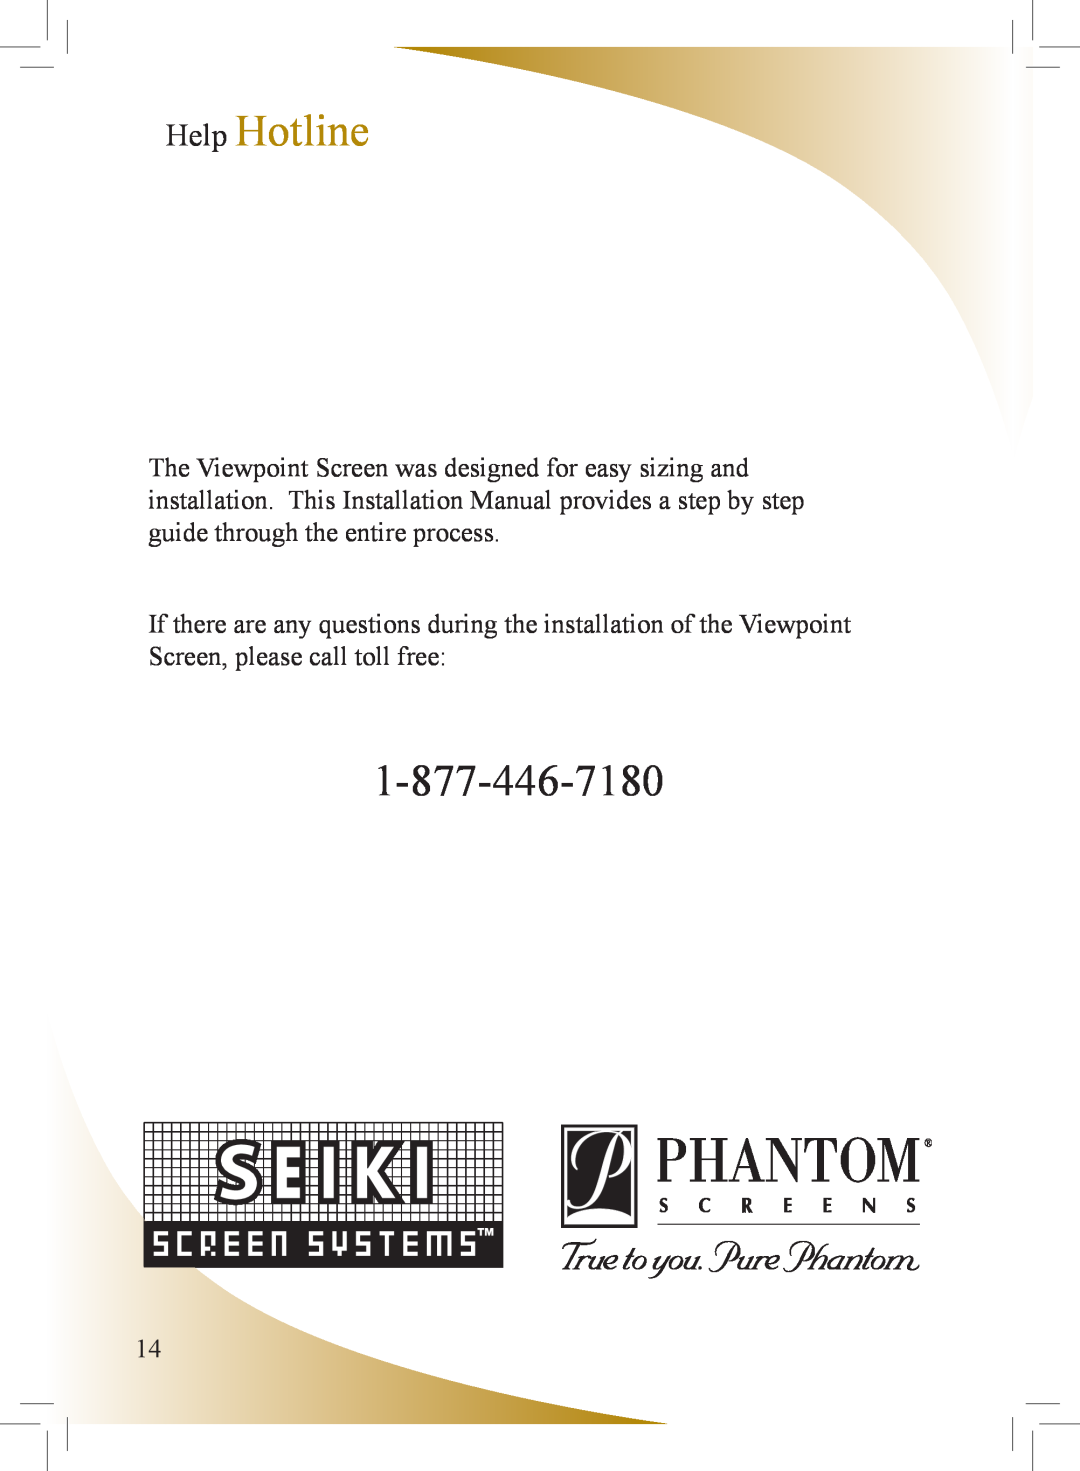 Phantom Tech VI0508 installation manual Help Hotline 